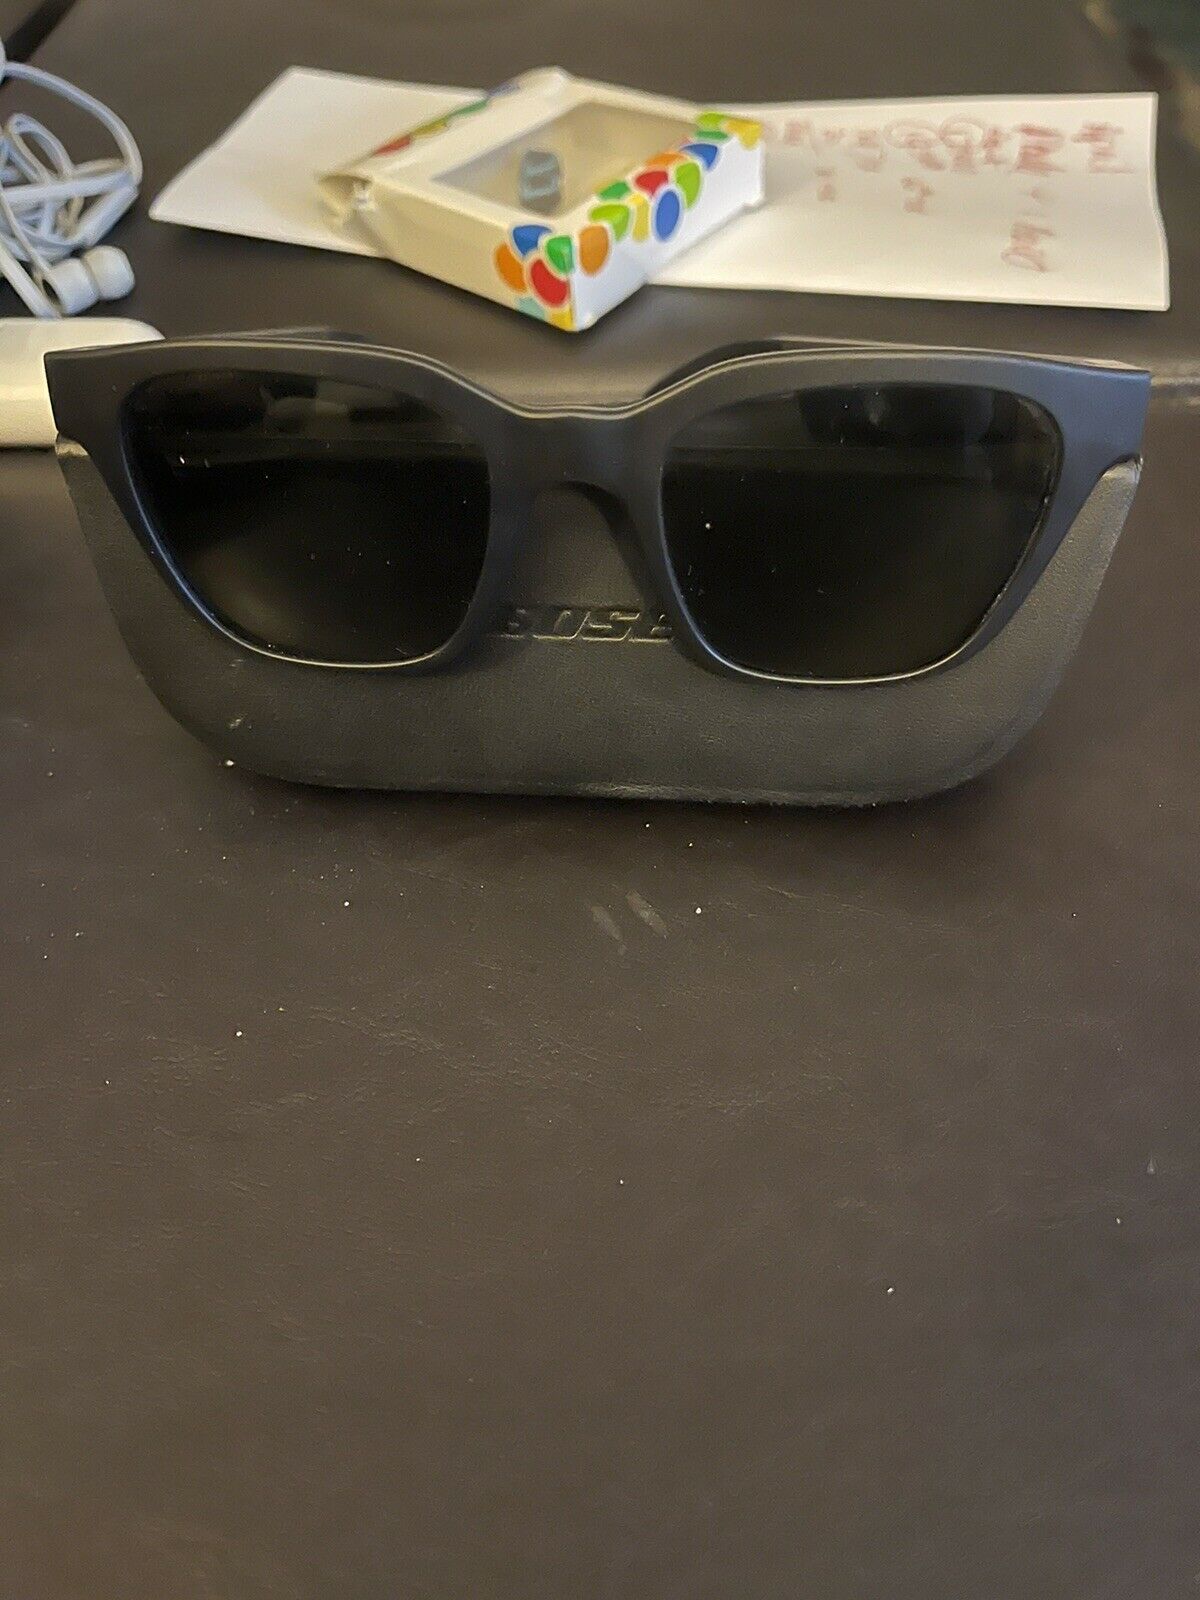 Bose 840667-0100 Frames Alto Audio Smart Sunglasses - Black